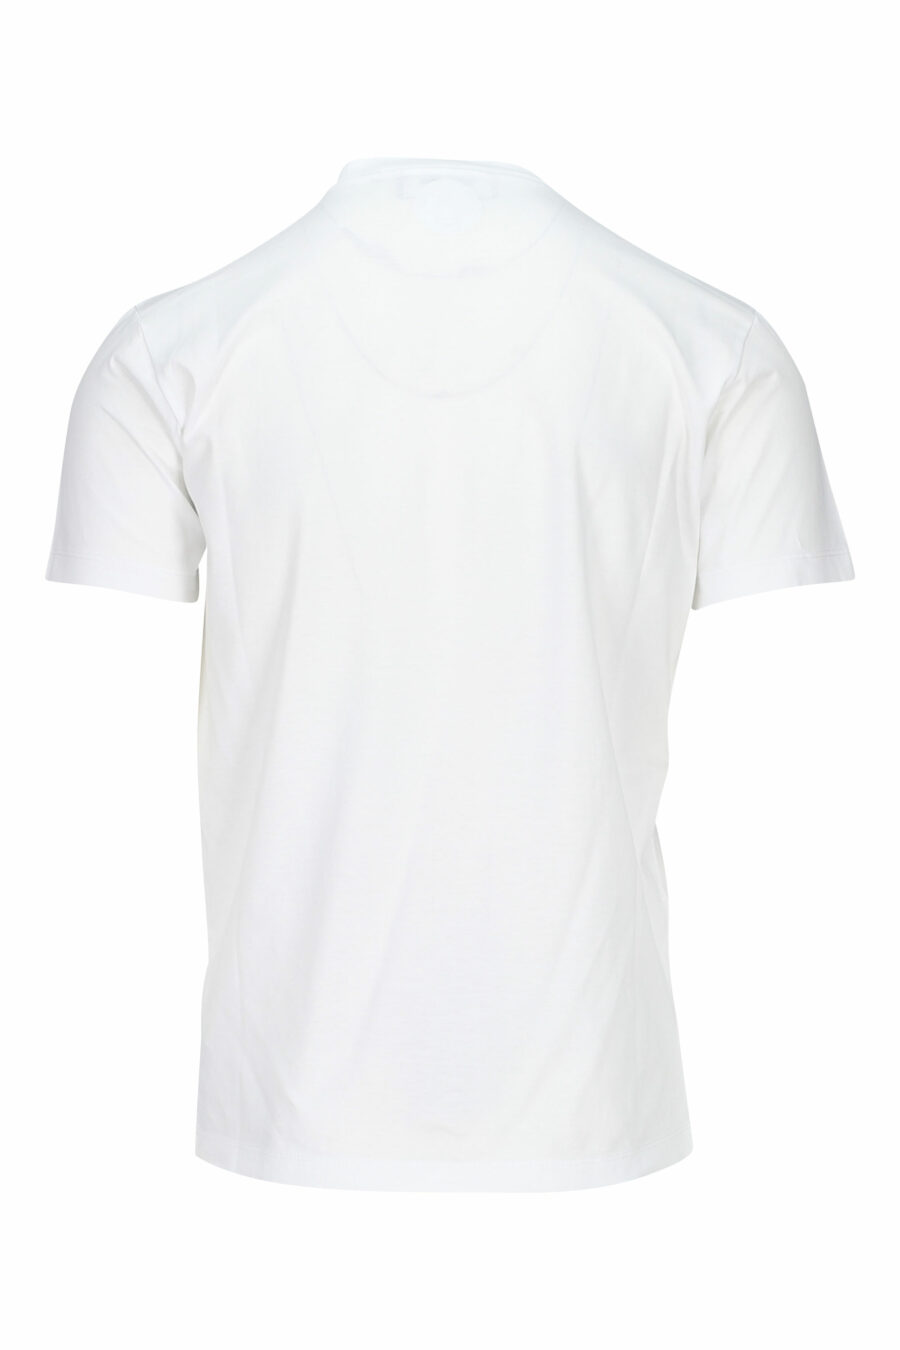 T-shirt branca com maxilogo rgb - 8052134941089 1